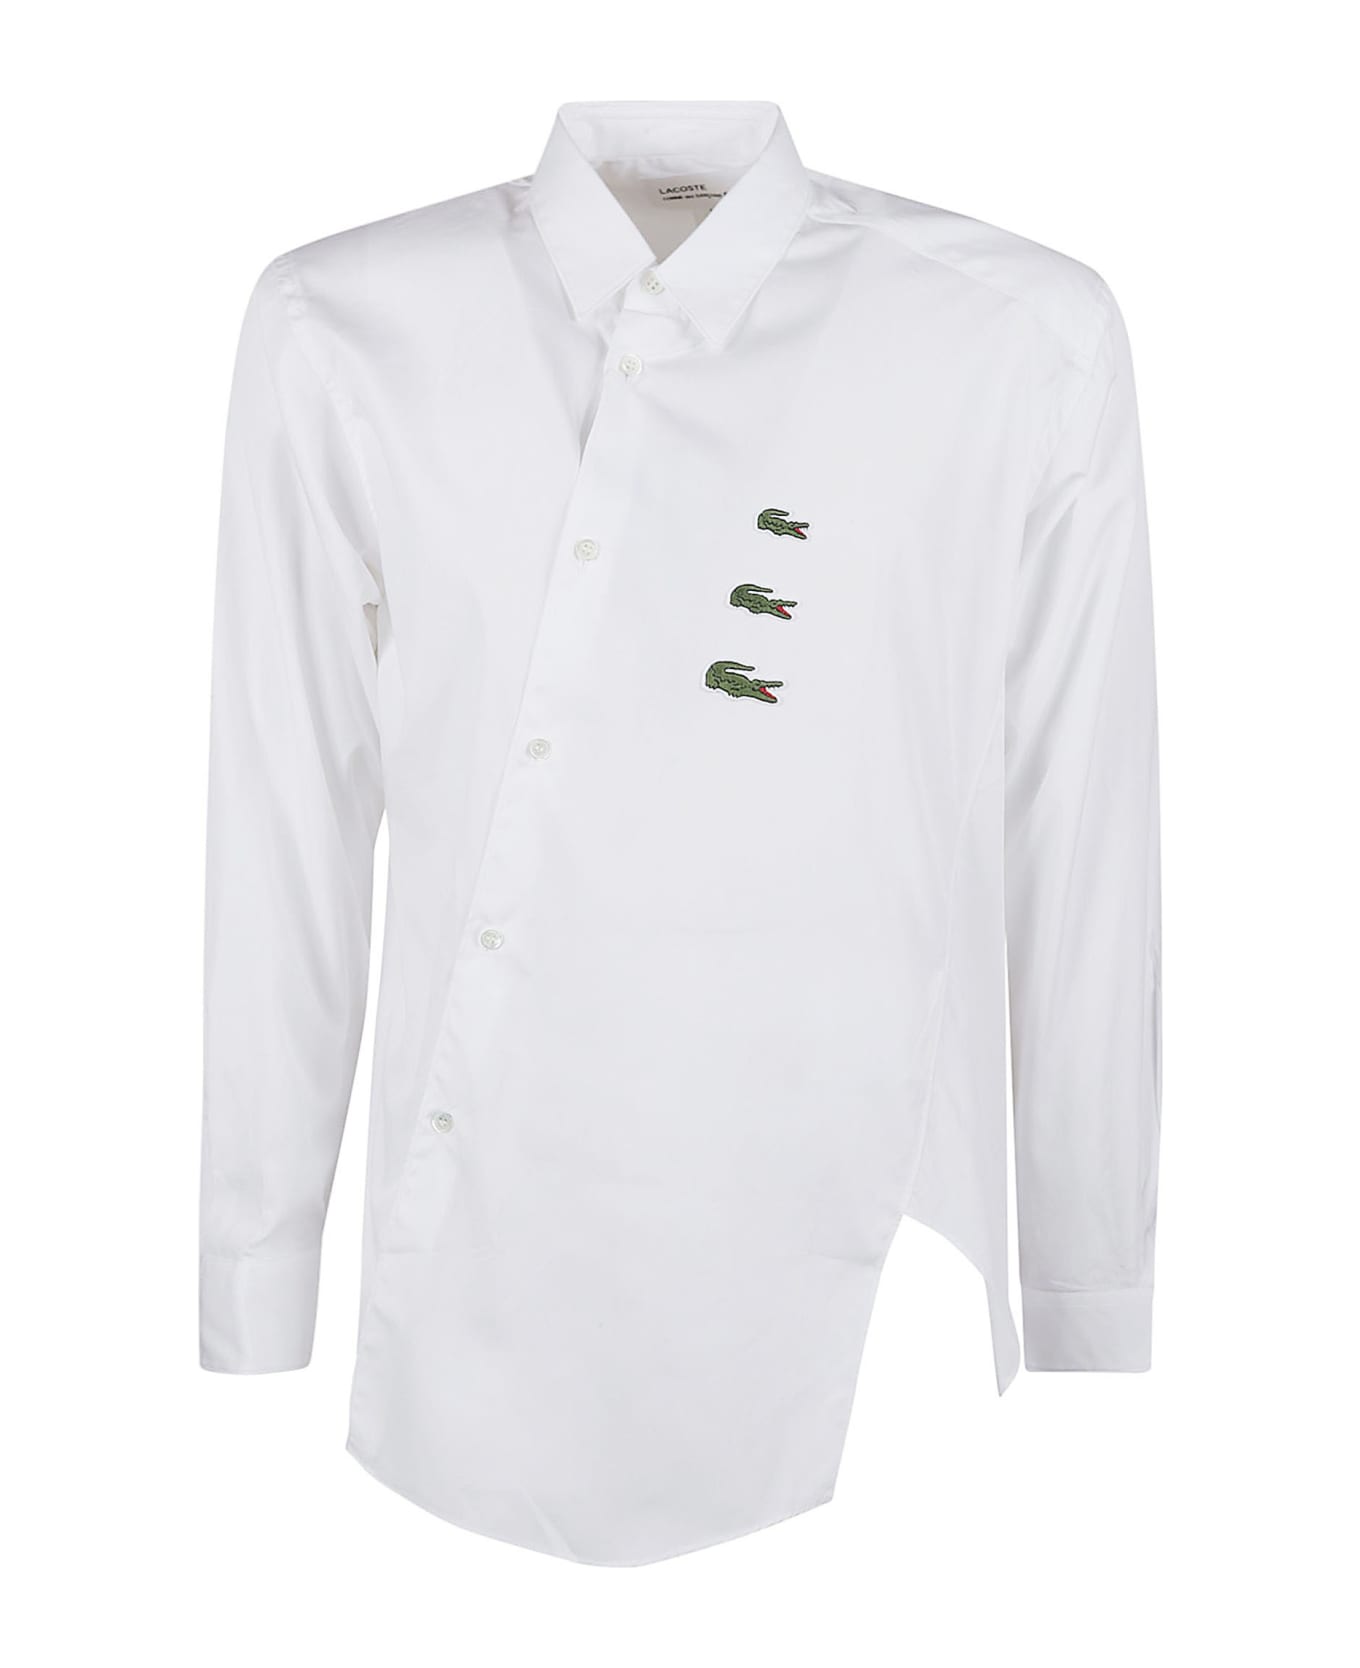 Comme des Garçons Asymmetric Crocodile Embroidered Shirt - White